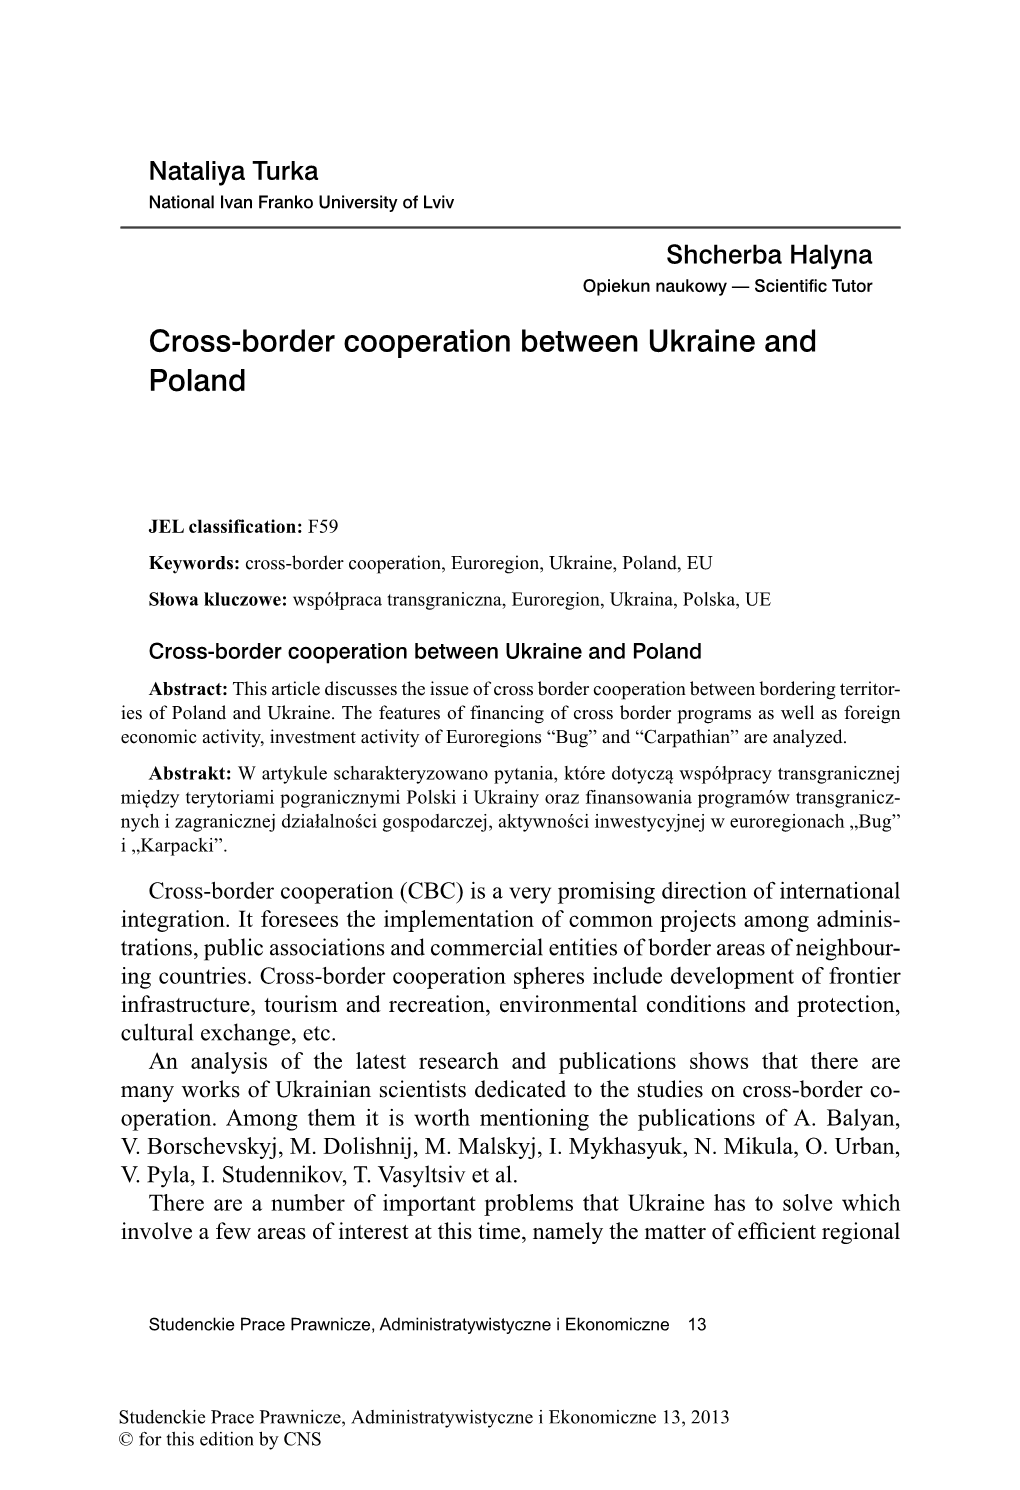 Cross-Border Cooperation Between Ukraine and Poland